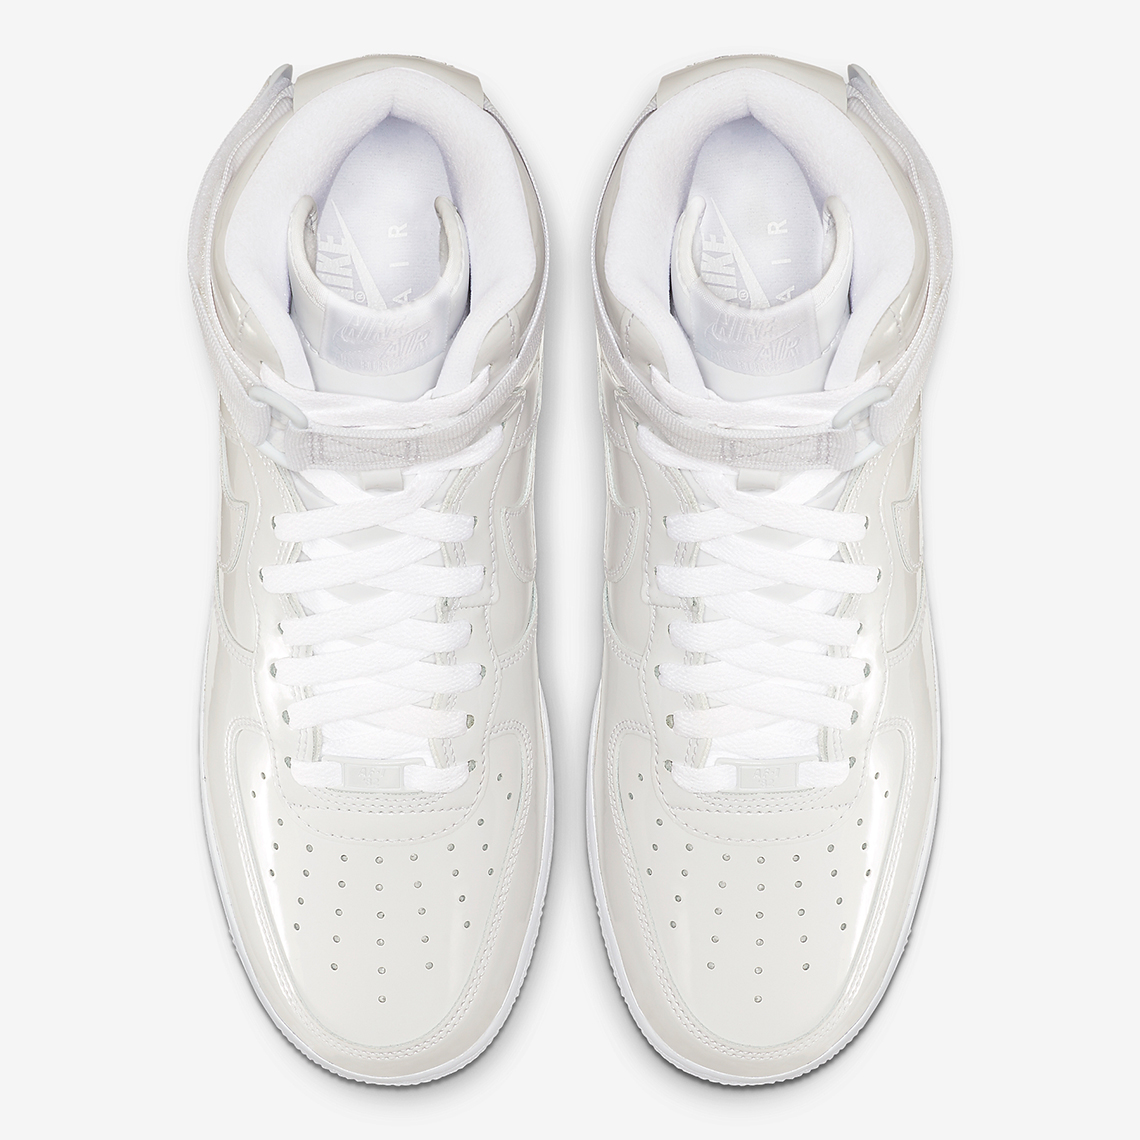 Nike Air Force 1 High Sheed White 743546-107 Release Date 